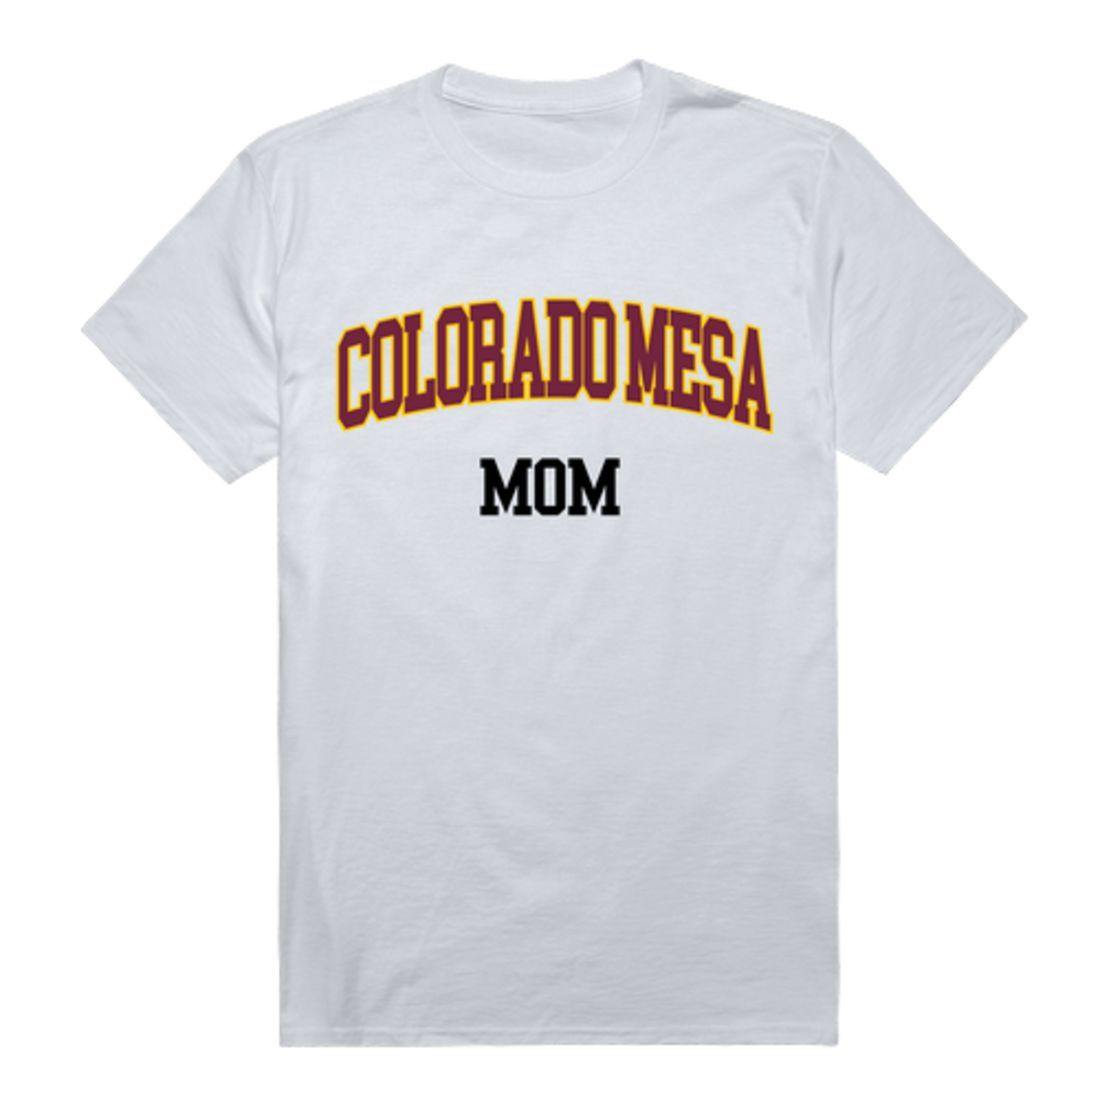 CMU Colorado Mesa University Maverick College Mom Womens T-Shirt-Campus-Wardrobe